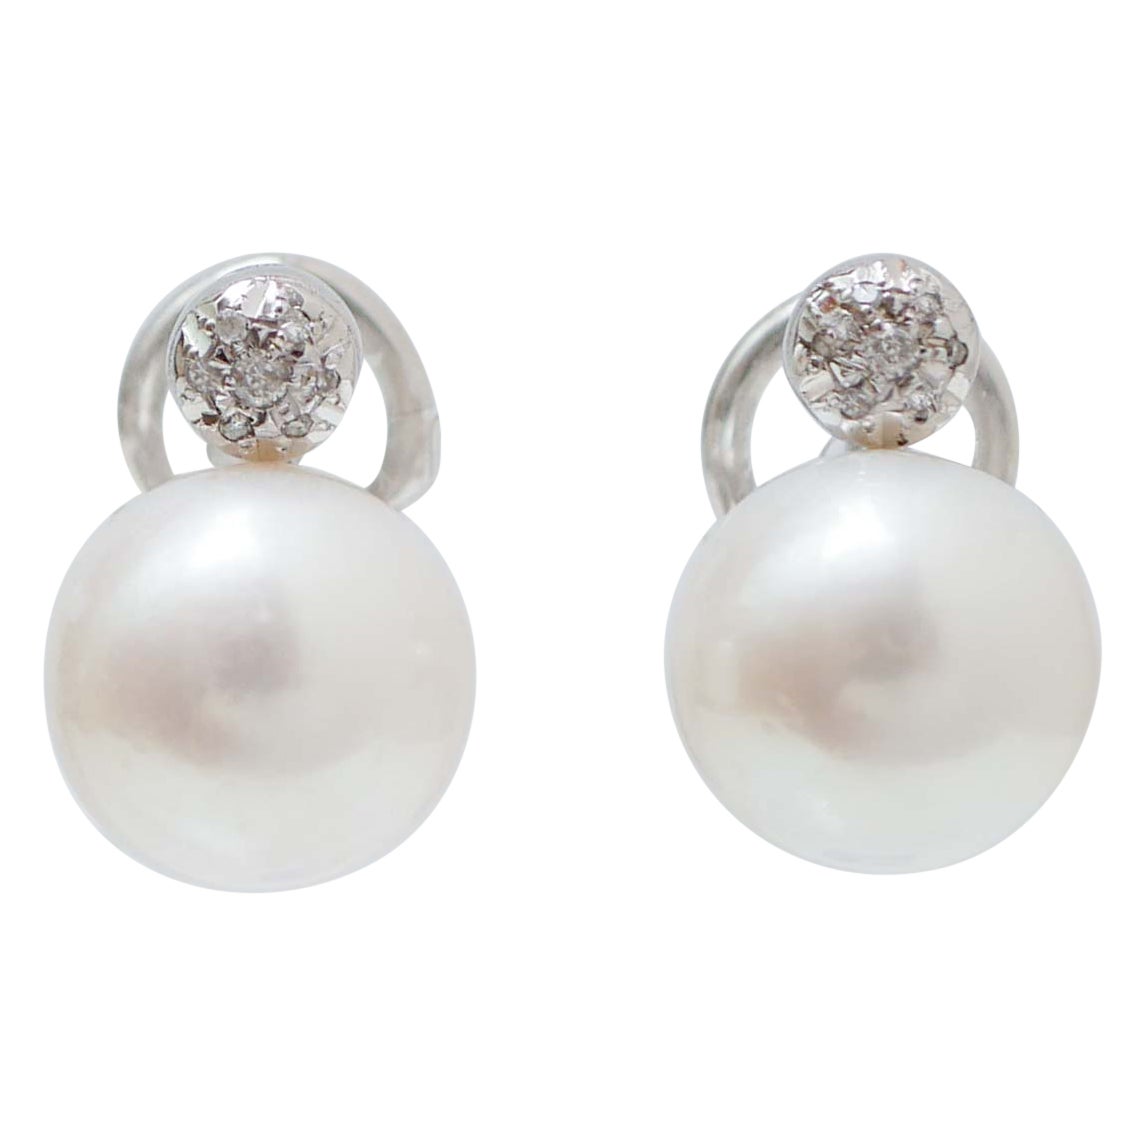 Pearls, Diamonds, 14 Karat White Gold Earrings.